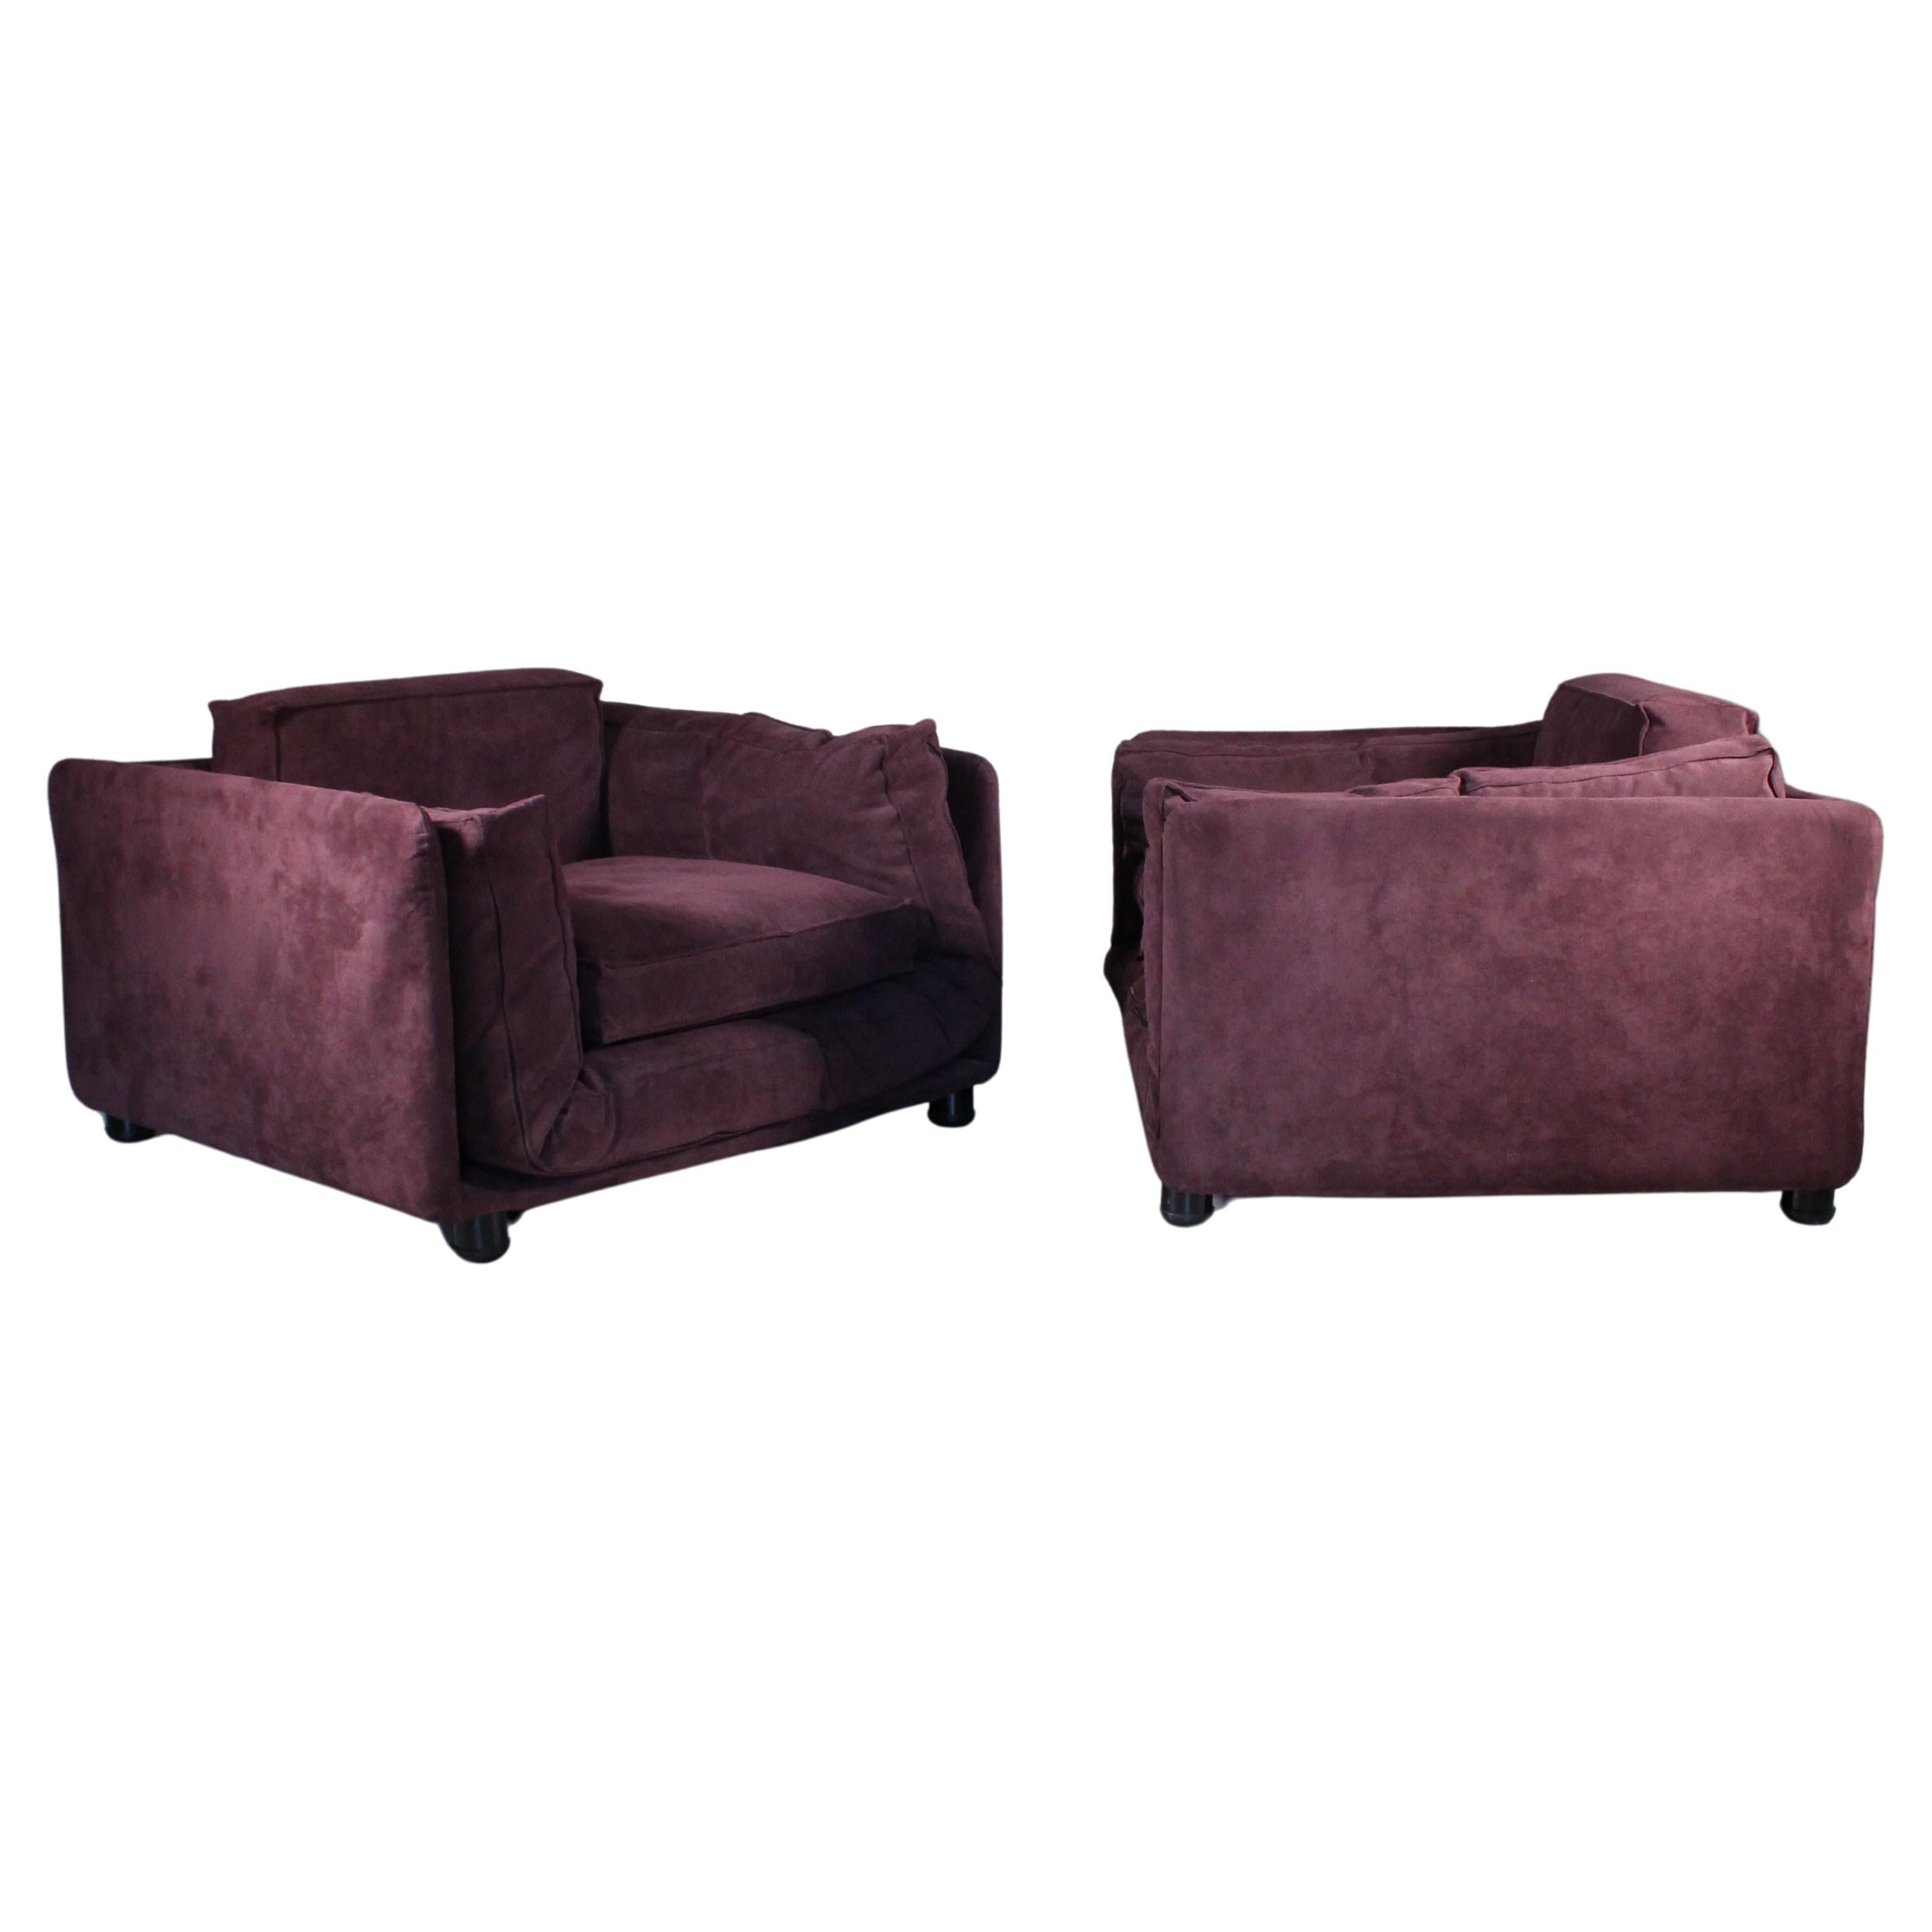 Set of two Flap armchair, De Pas, D'urbino, Lomazzo 